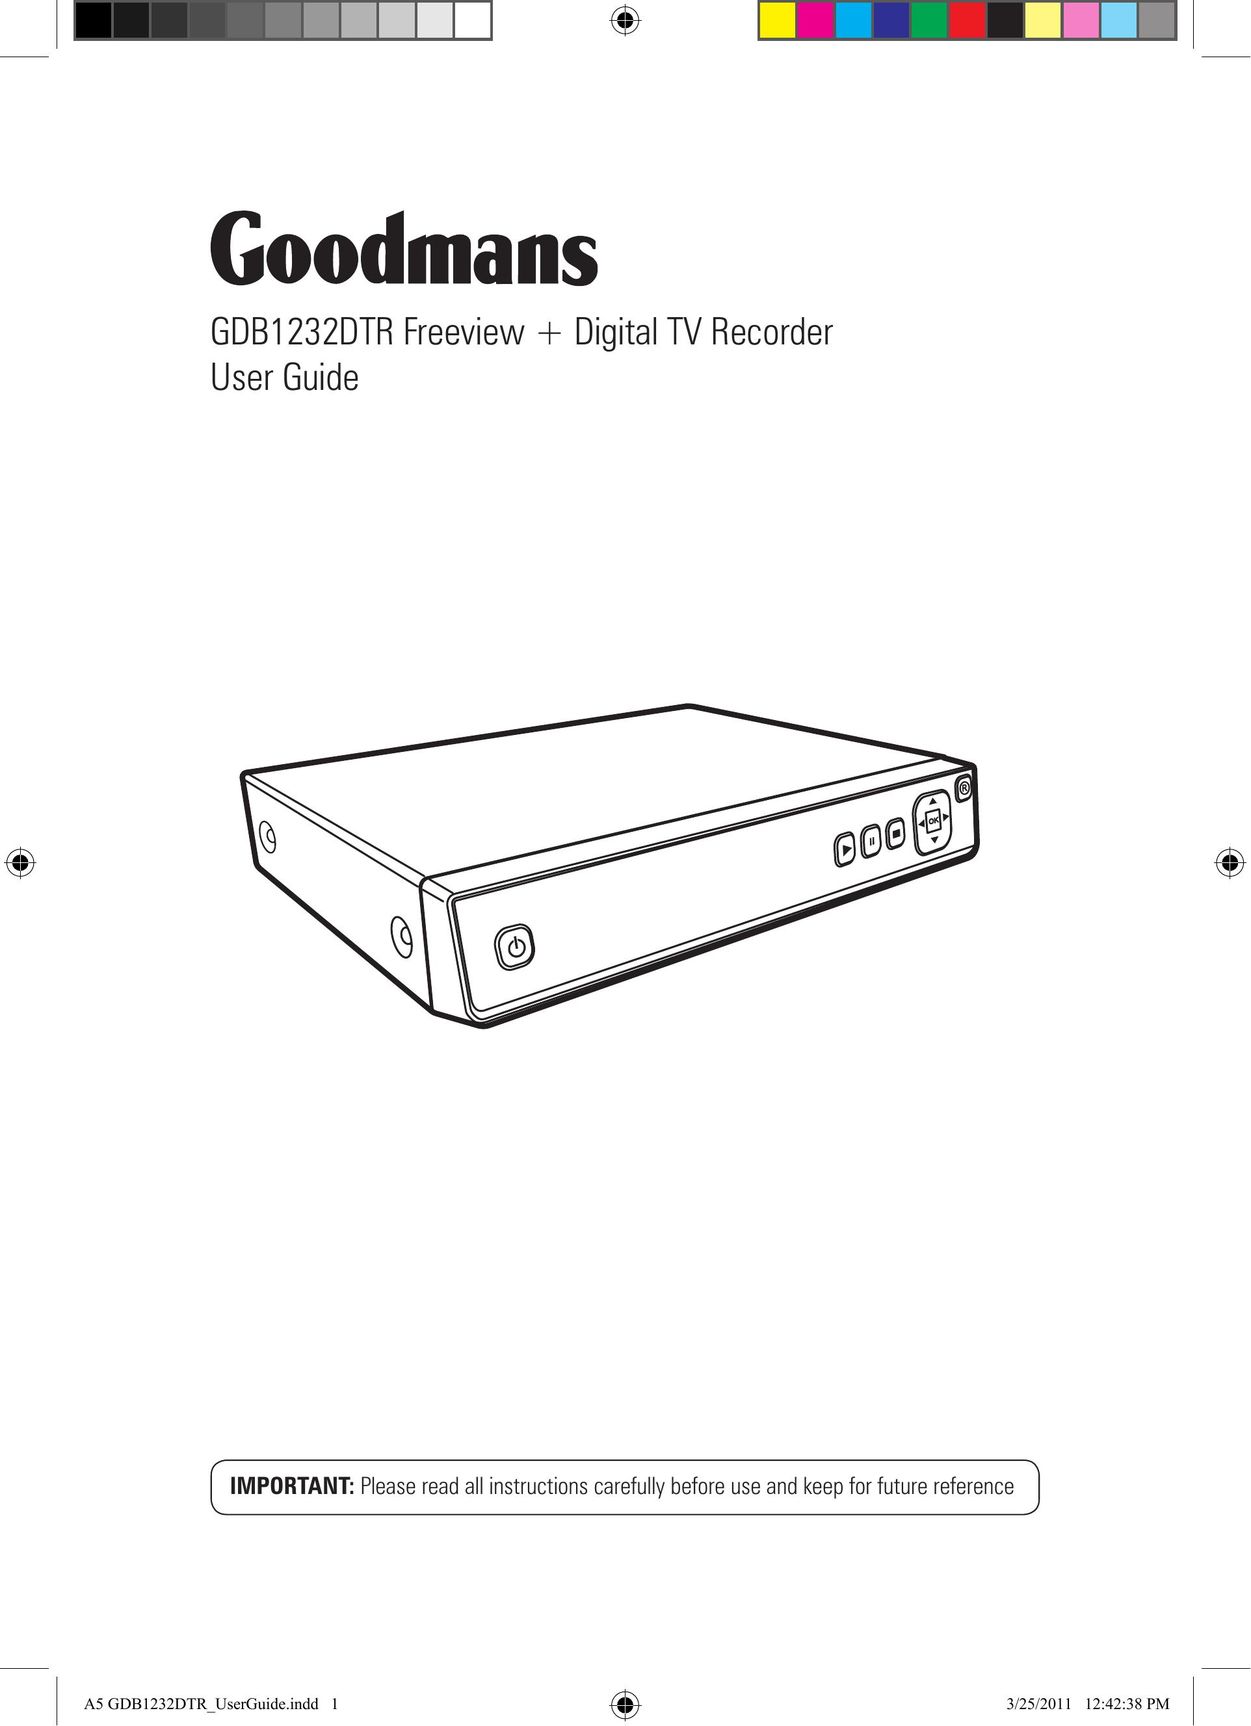 Goodmans GDB1232DTR DVR User Manual